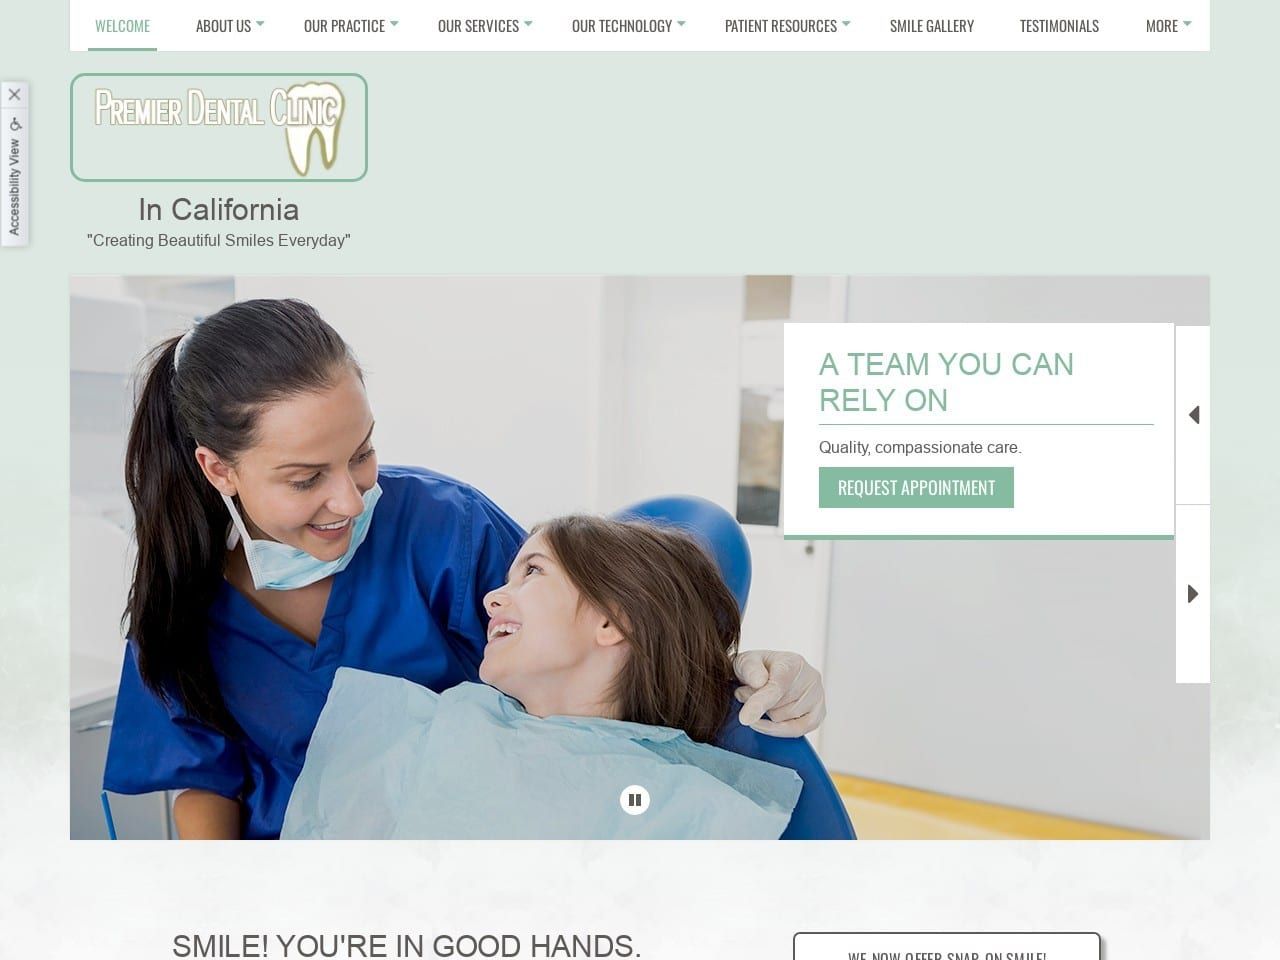 Premier Dental Clinic Inc Website Screenshot from thepremierdental.com